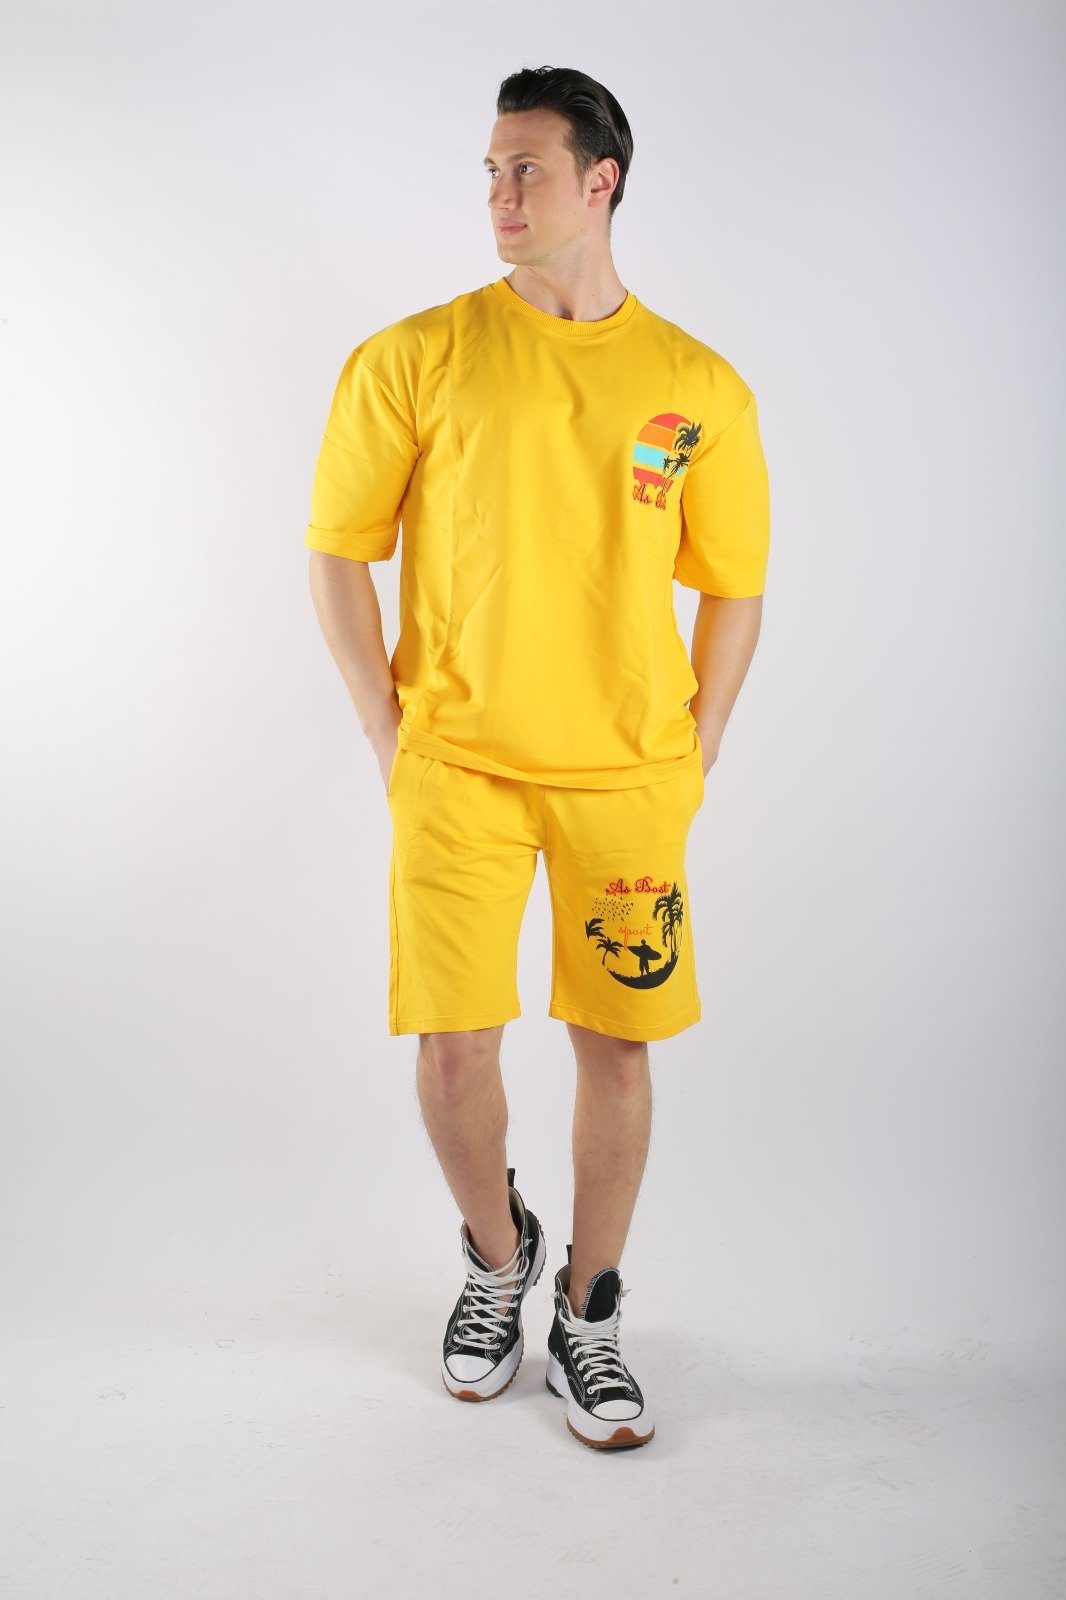 & T-Shirt Shorts ALGINOO Short) (Set, Gelb Shorts T-Shirt T-Shirt + &